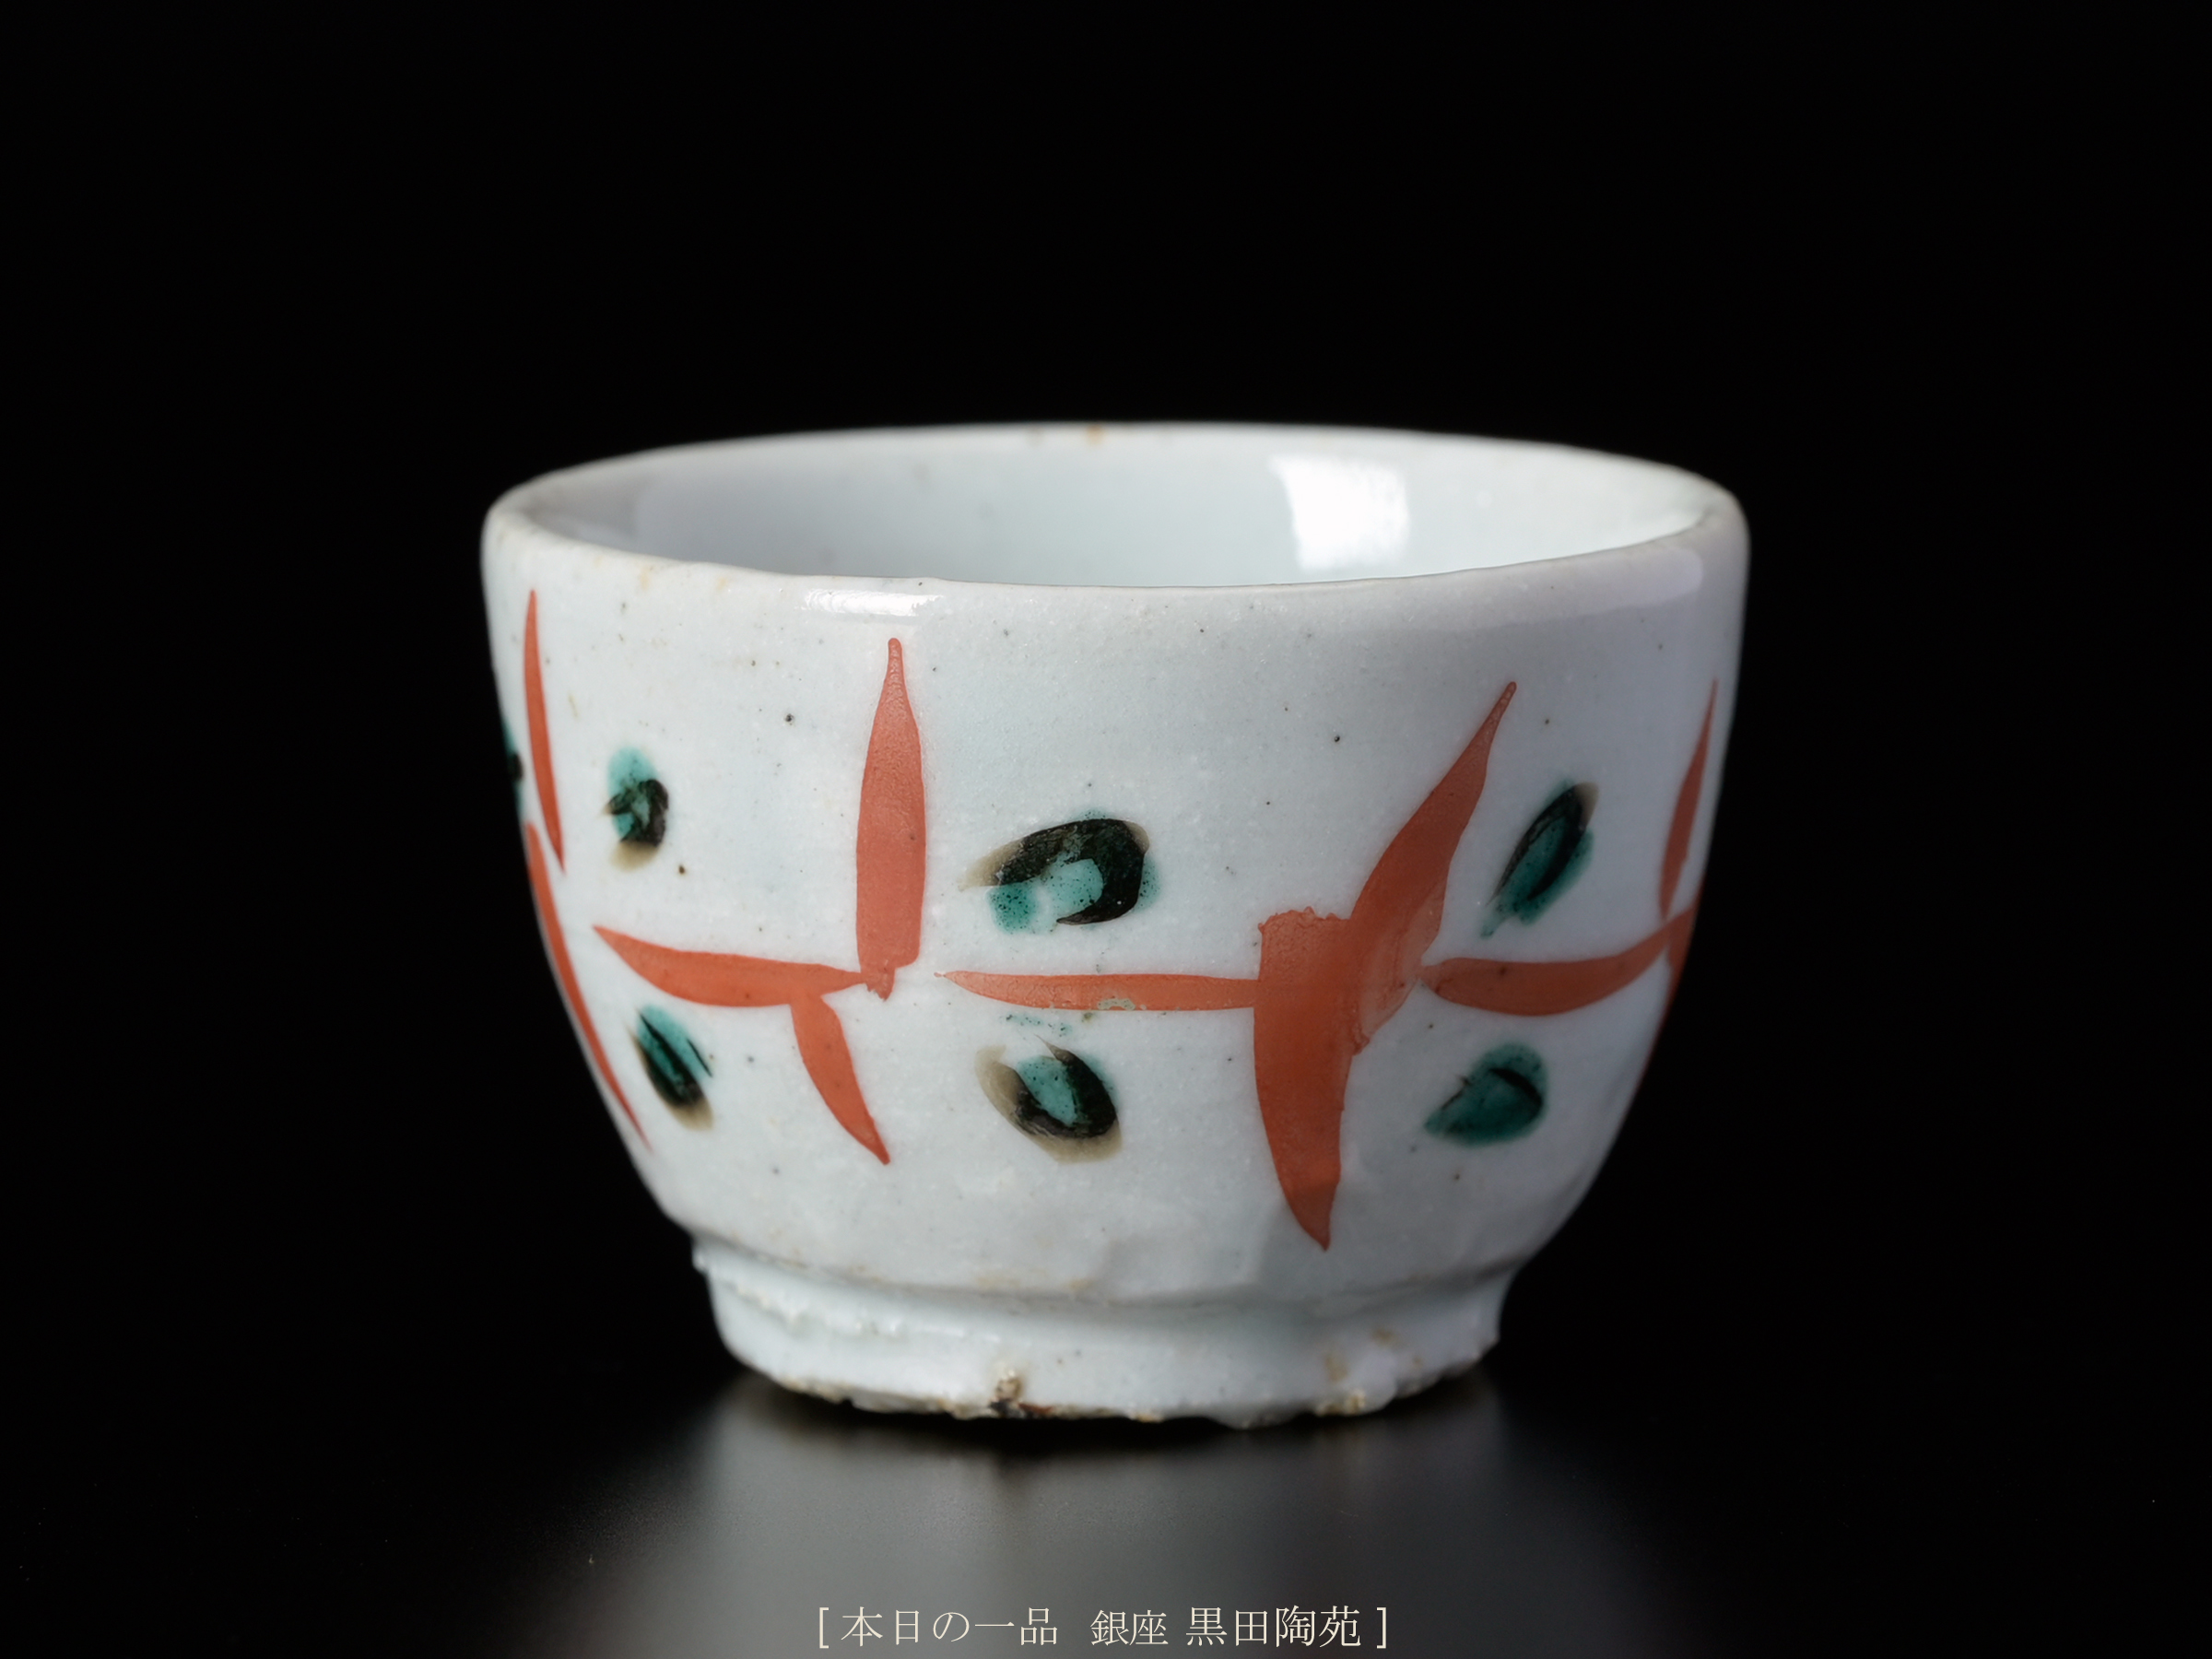 Munemaro Ishiguro: Sake cup